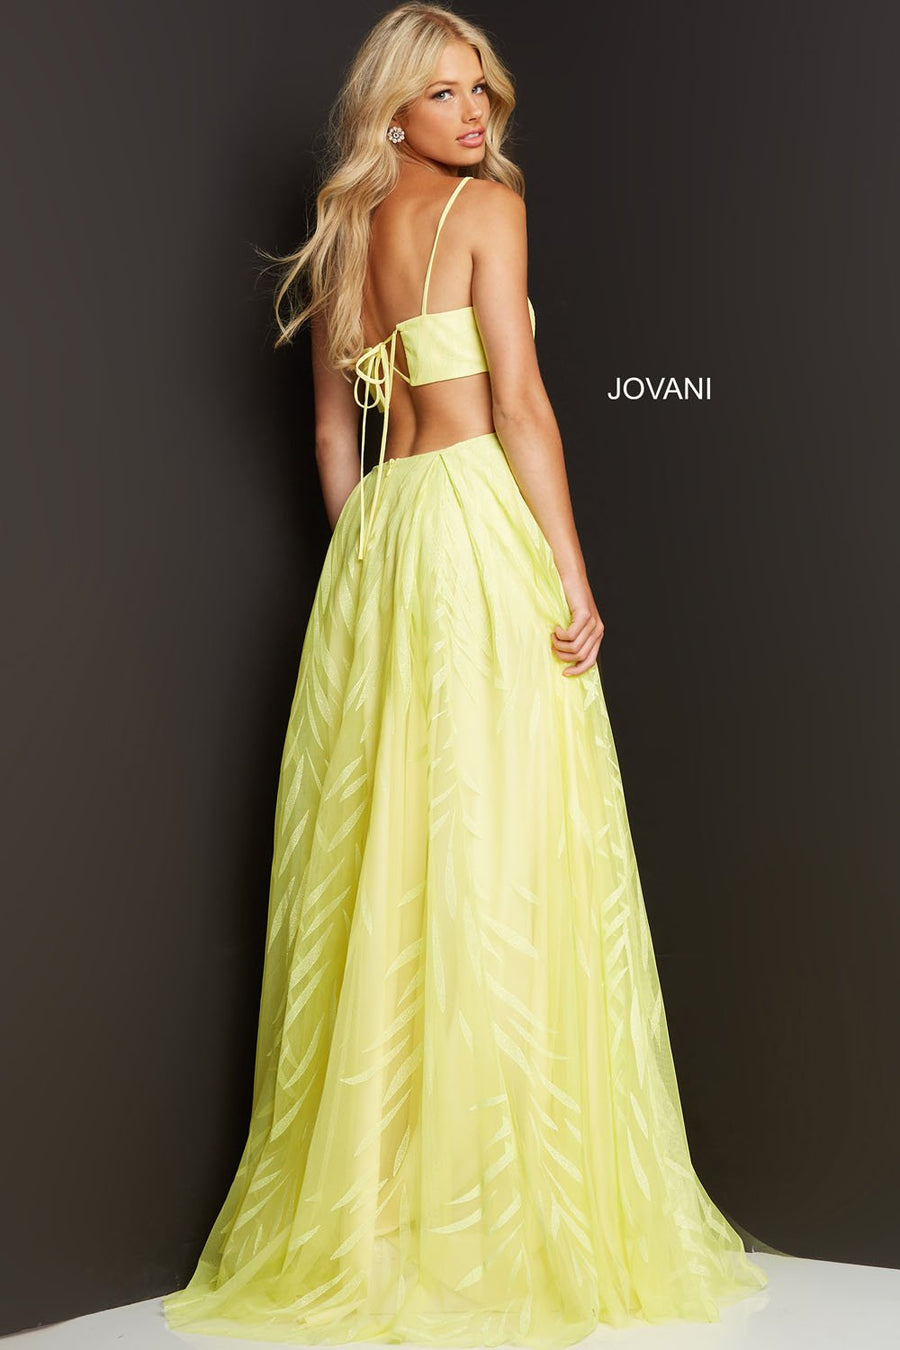 Jovani 07251 Yellow prom dresses images.